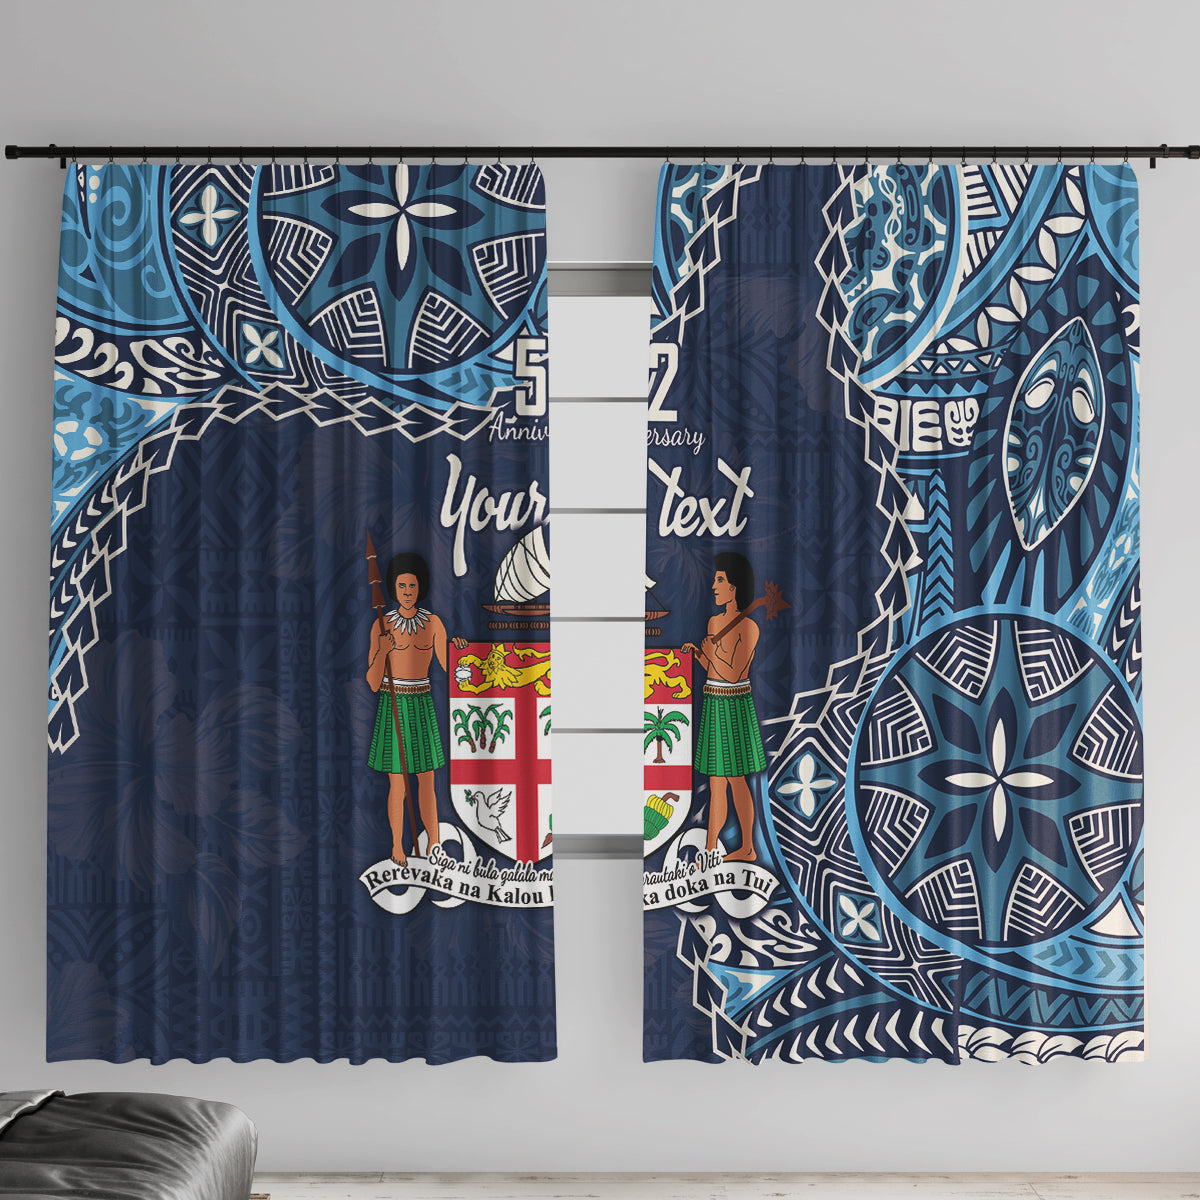 Personalised Fiji 54th Anniversary Window Curtain Siga Ni Bula Galala Marautaki O Viti